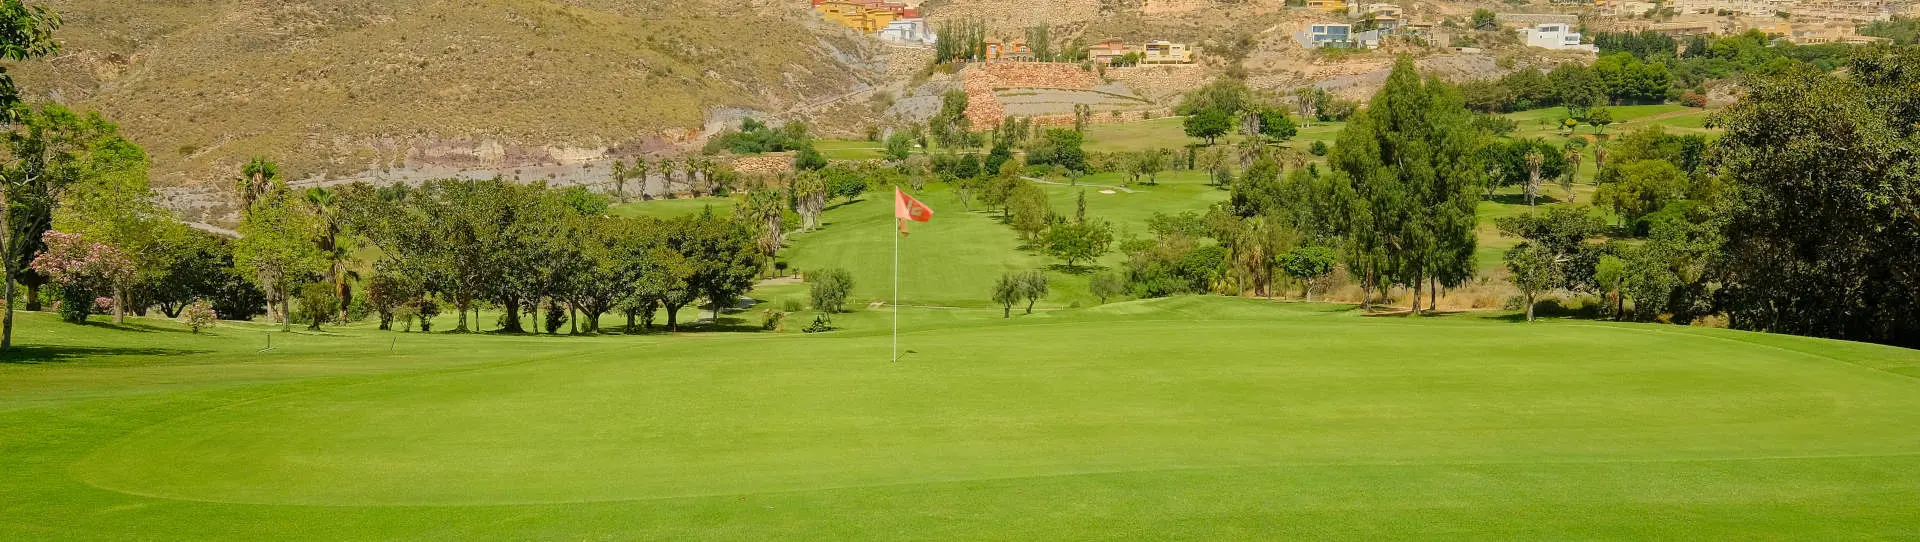 Spain golf courses - La Envia Golf Country Club - Photo 1